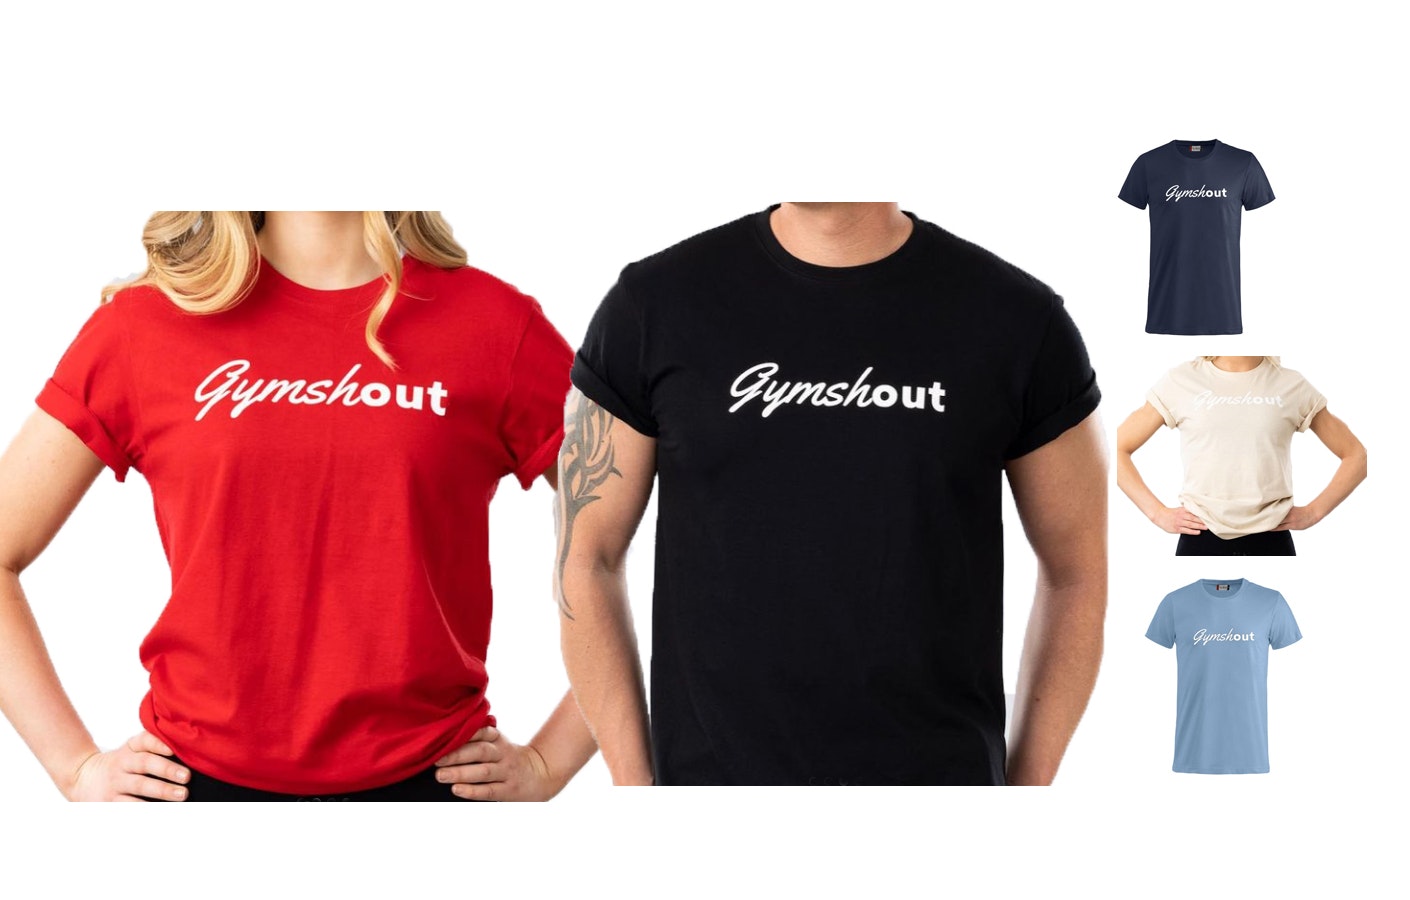 Gymshout T-shirt 5 färger